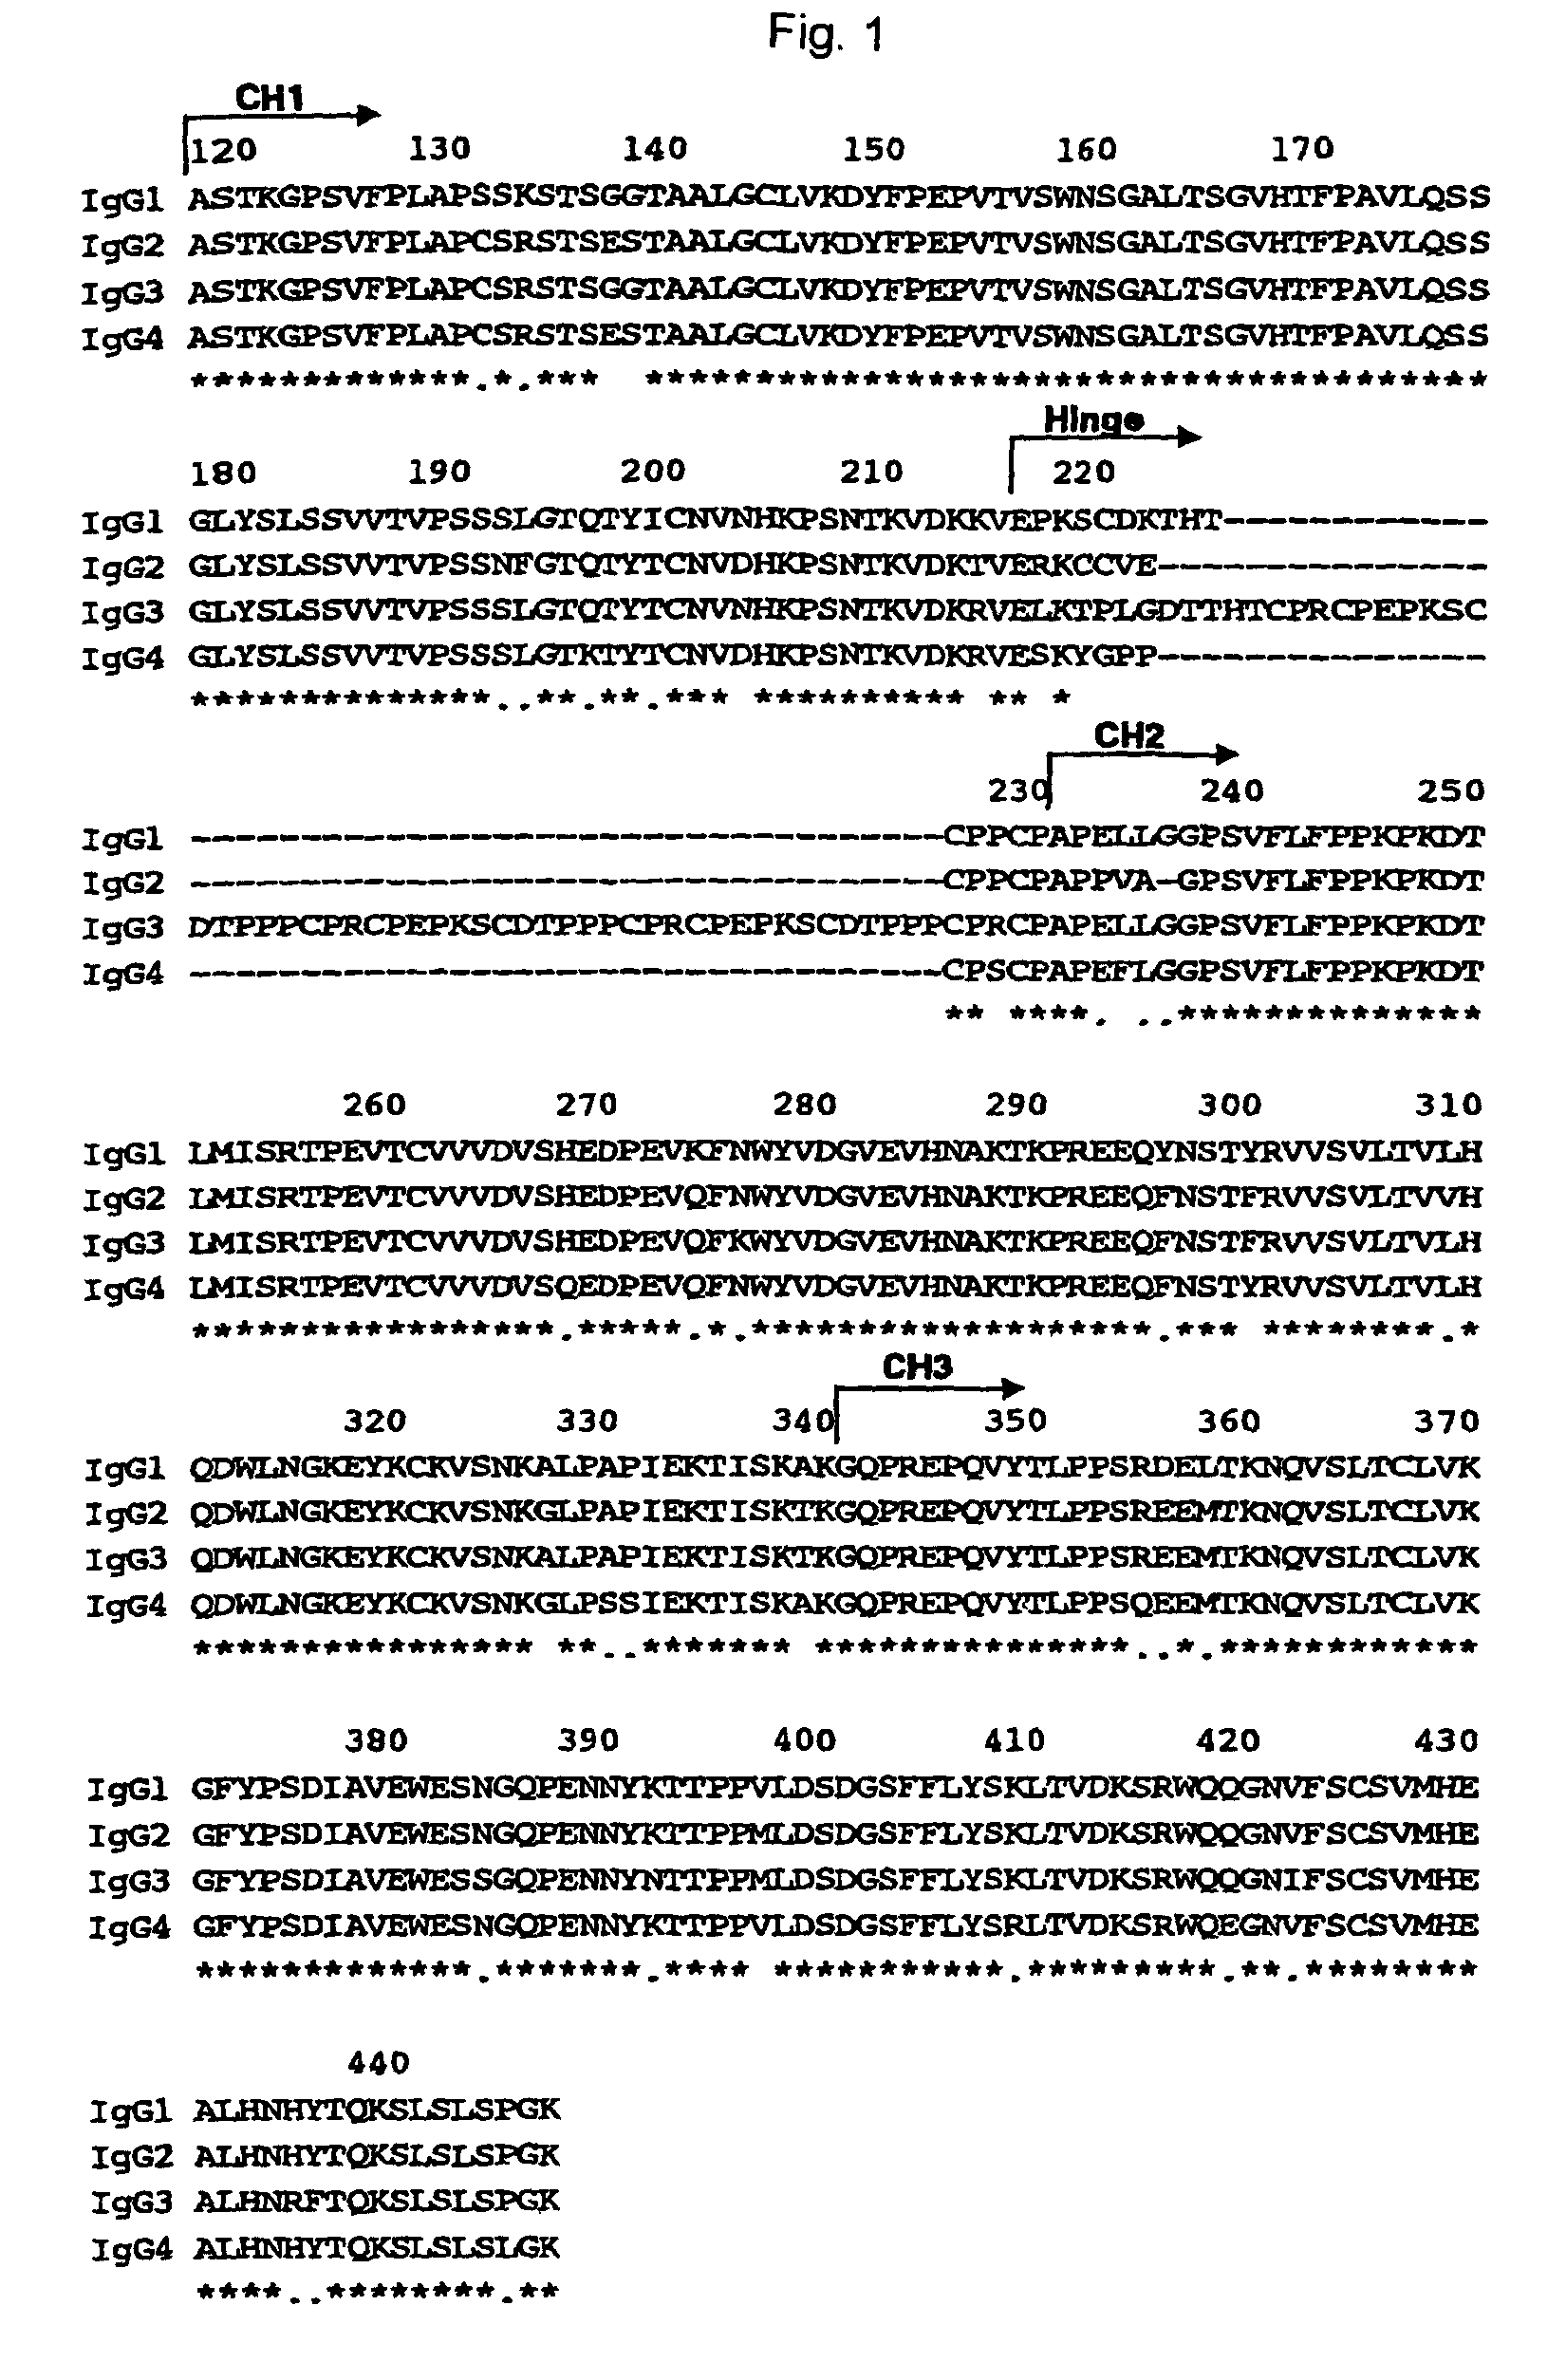 Recombinant antibody composition